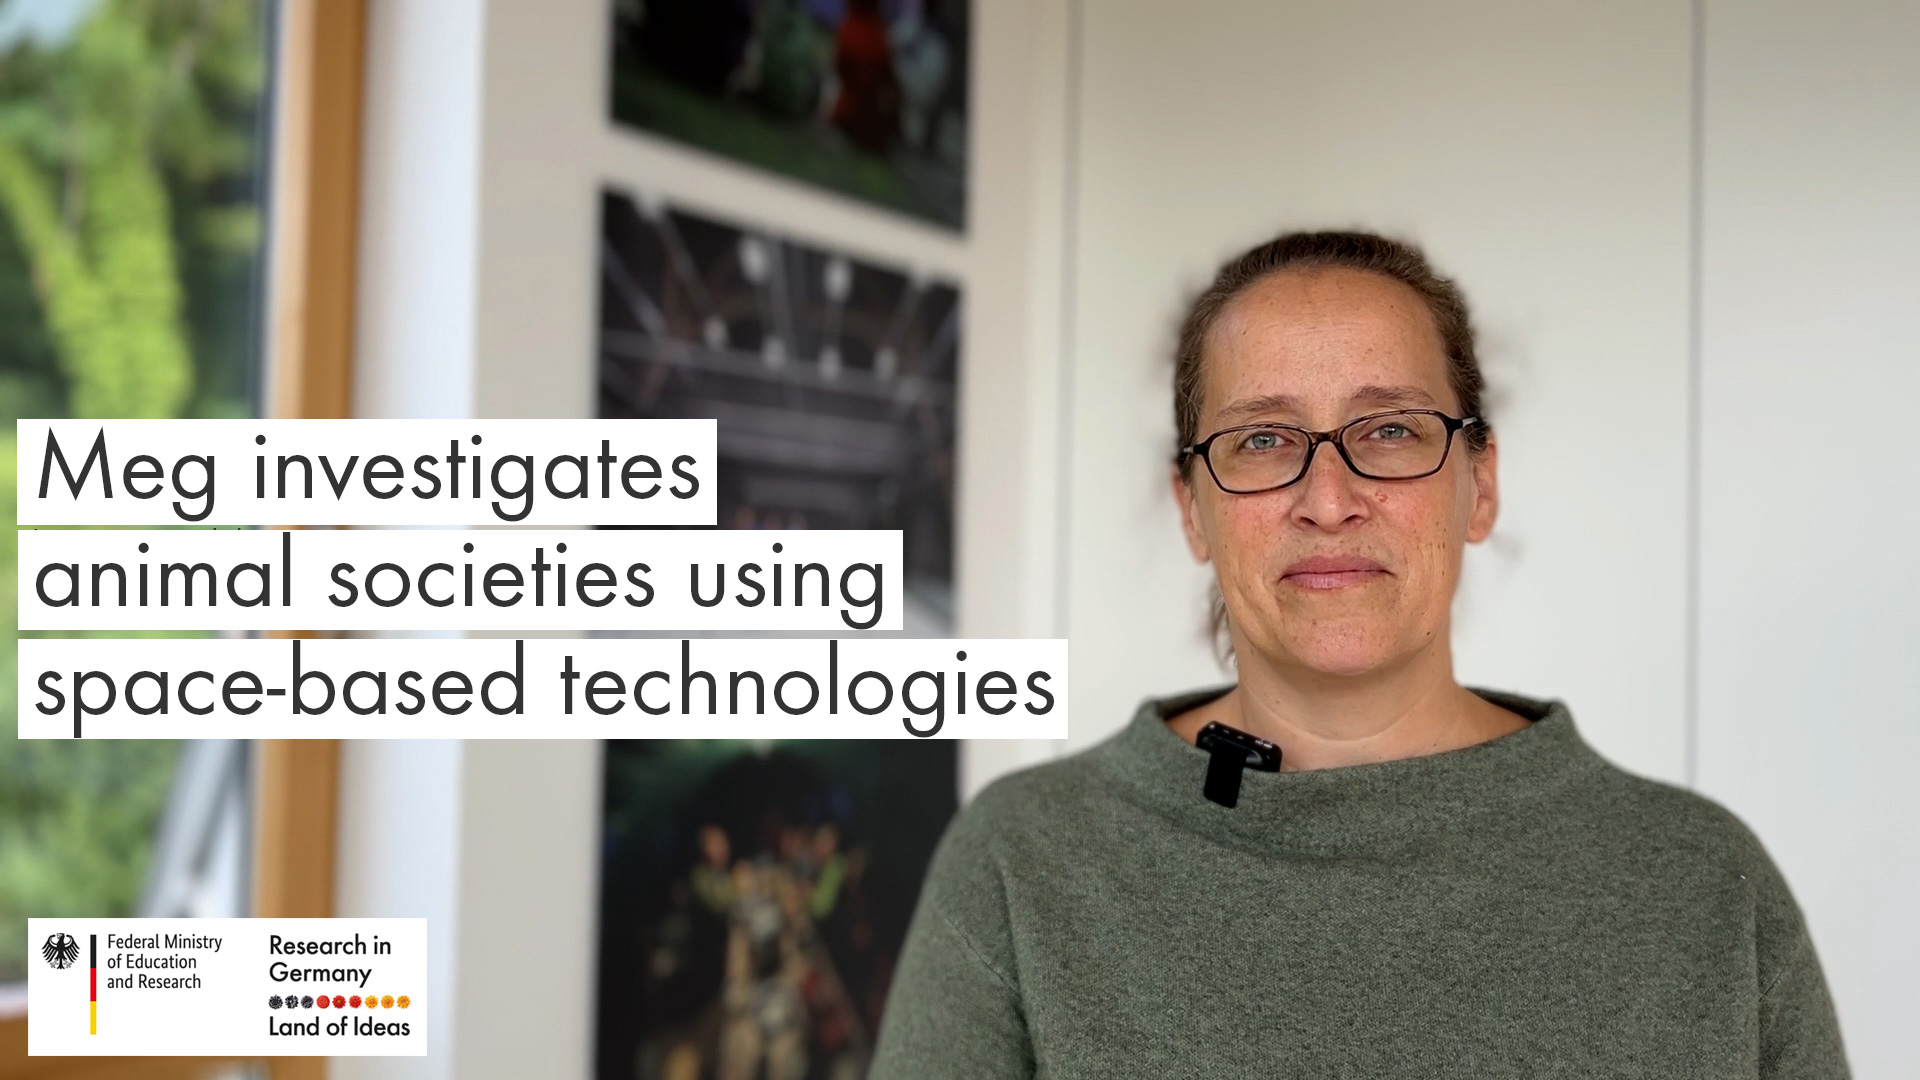 Video Teaserbild: Meg investigates animal societies using space-based technologies